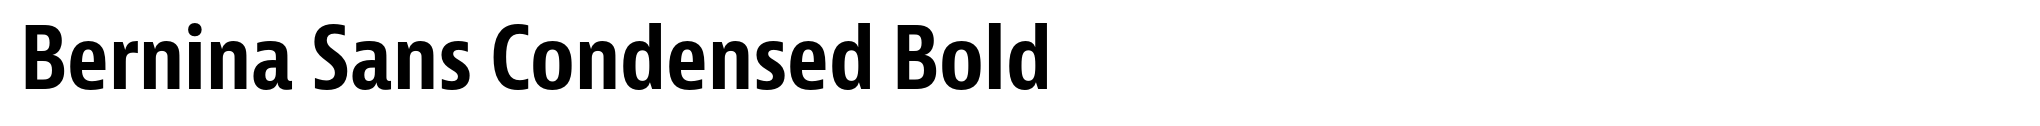 Bernina Sans Condensed Bold image